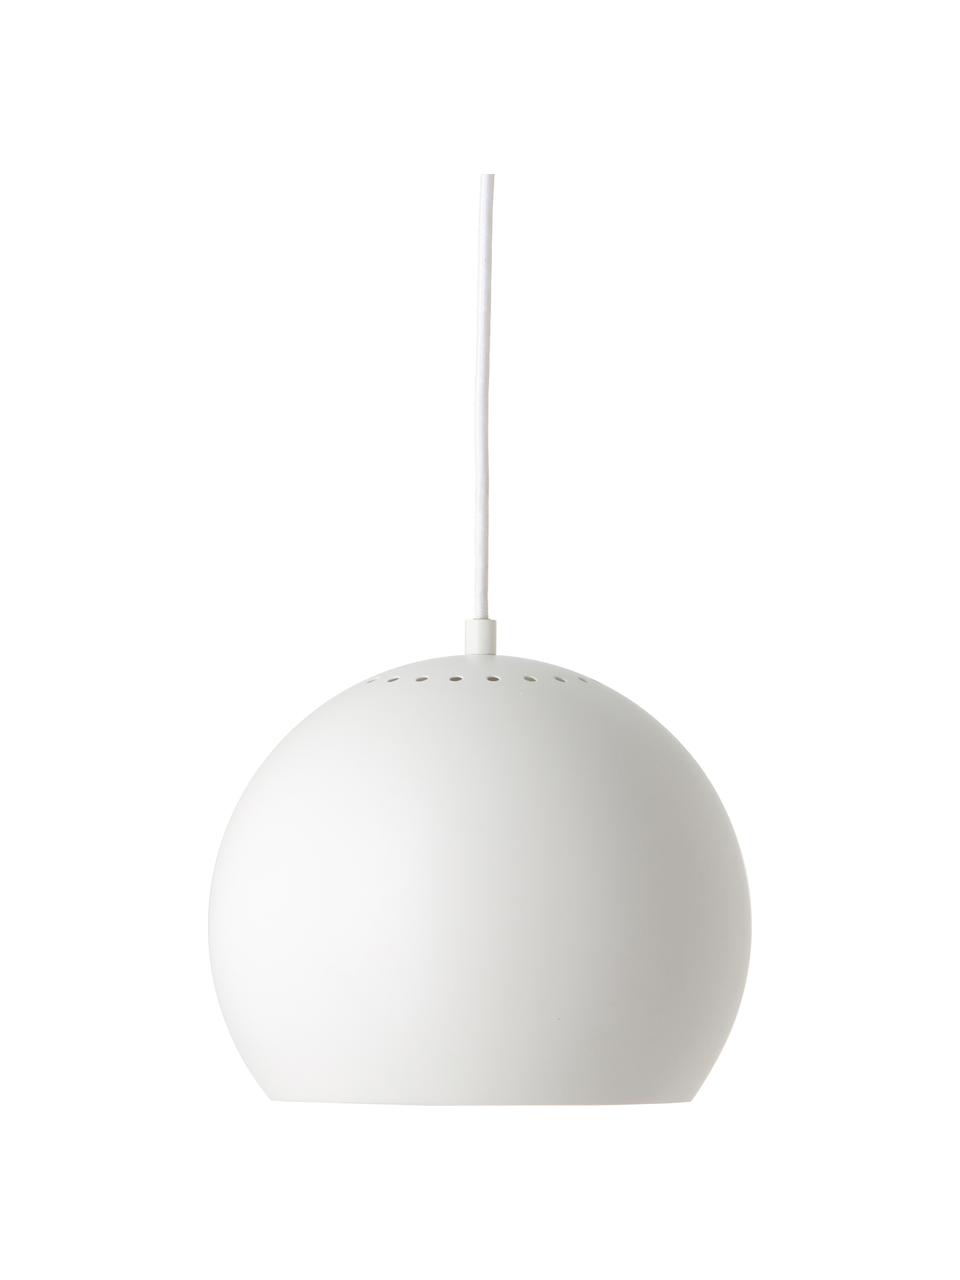 Malé závěsné svítidlo ve tvaru koule Ball, Matná bílá, bílá